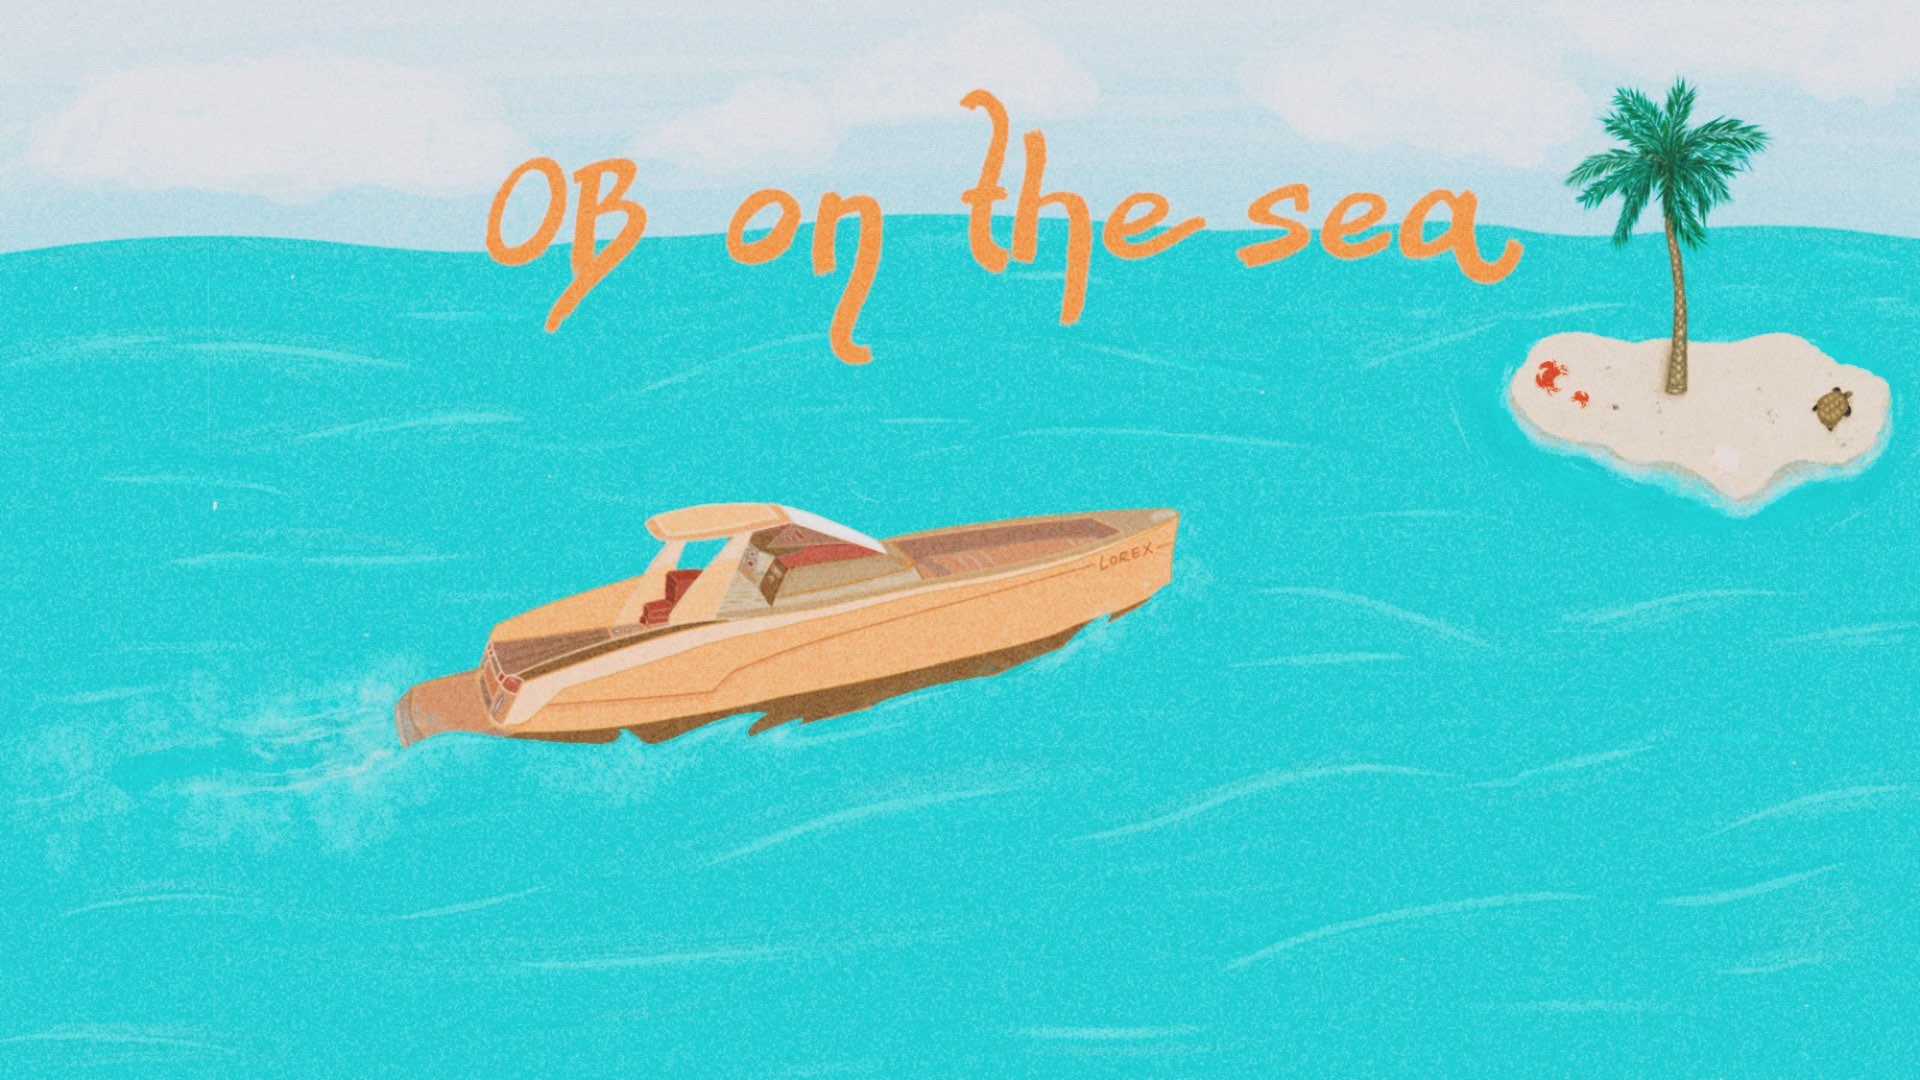 OB on the sea